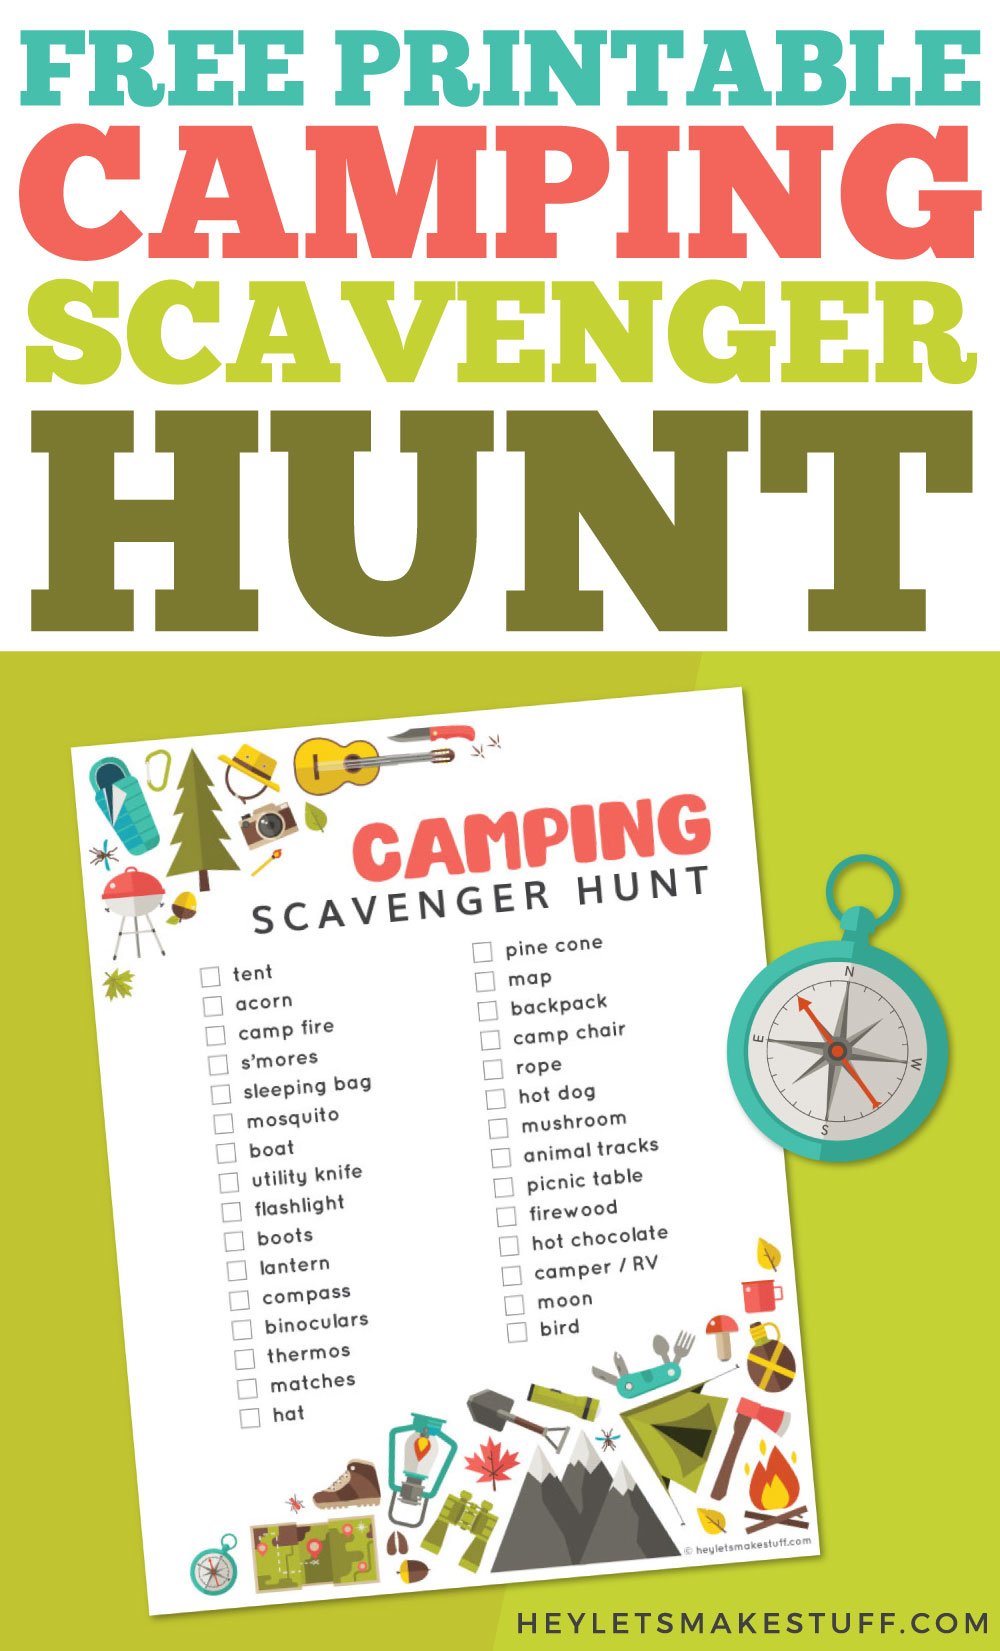 Free Printable Camping Scavenger Hunt Hey Let #39 s Make Stuff